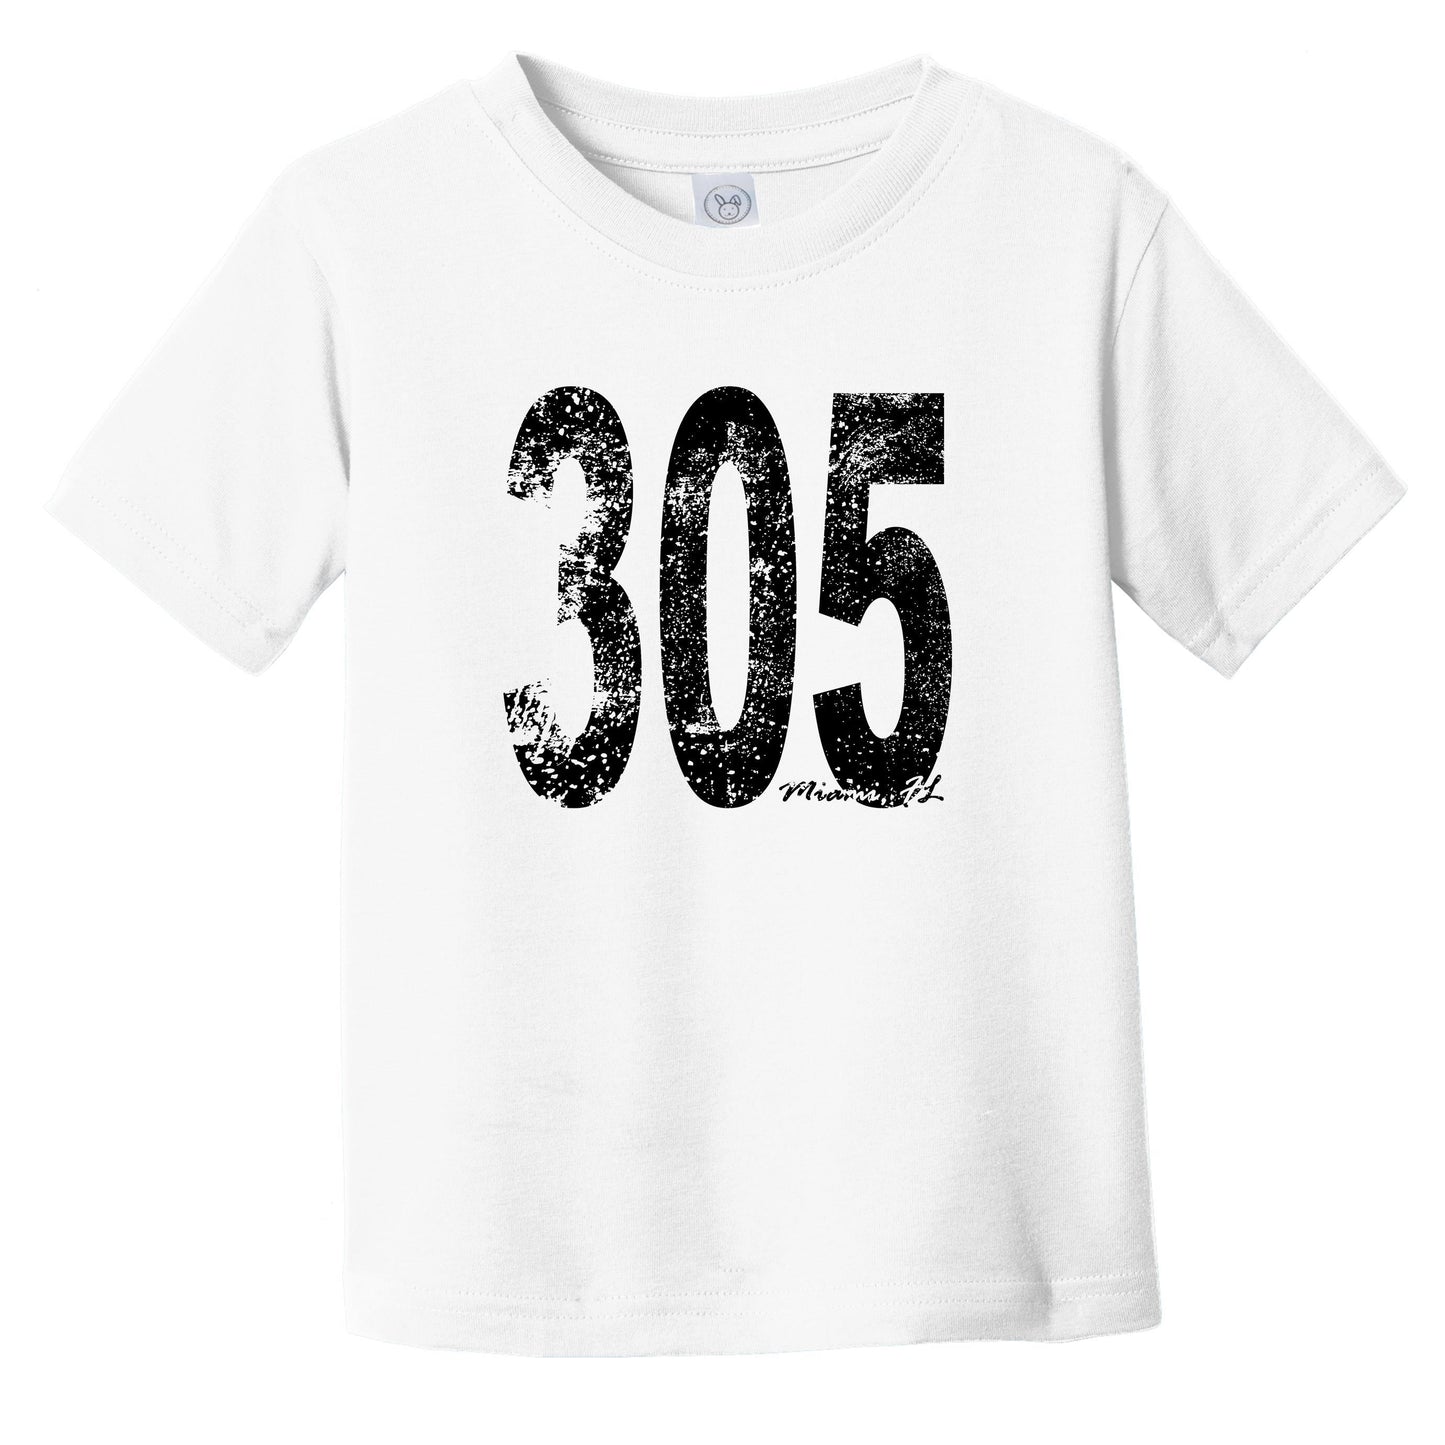 305 Miami Florida Area Code Infant Toddler T-Shirt